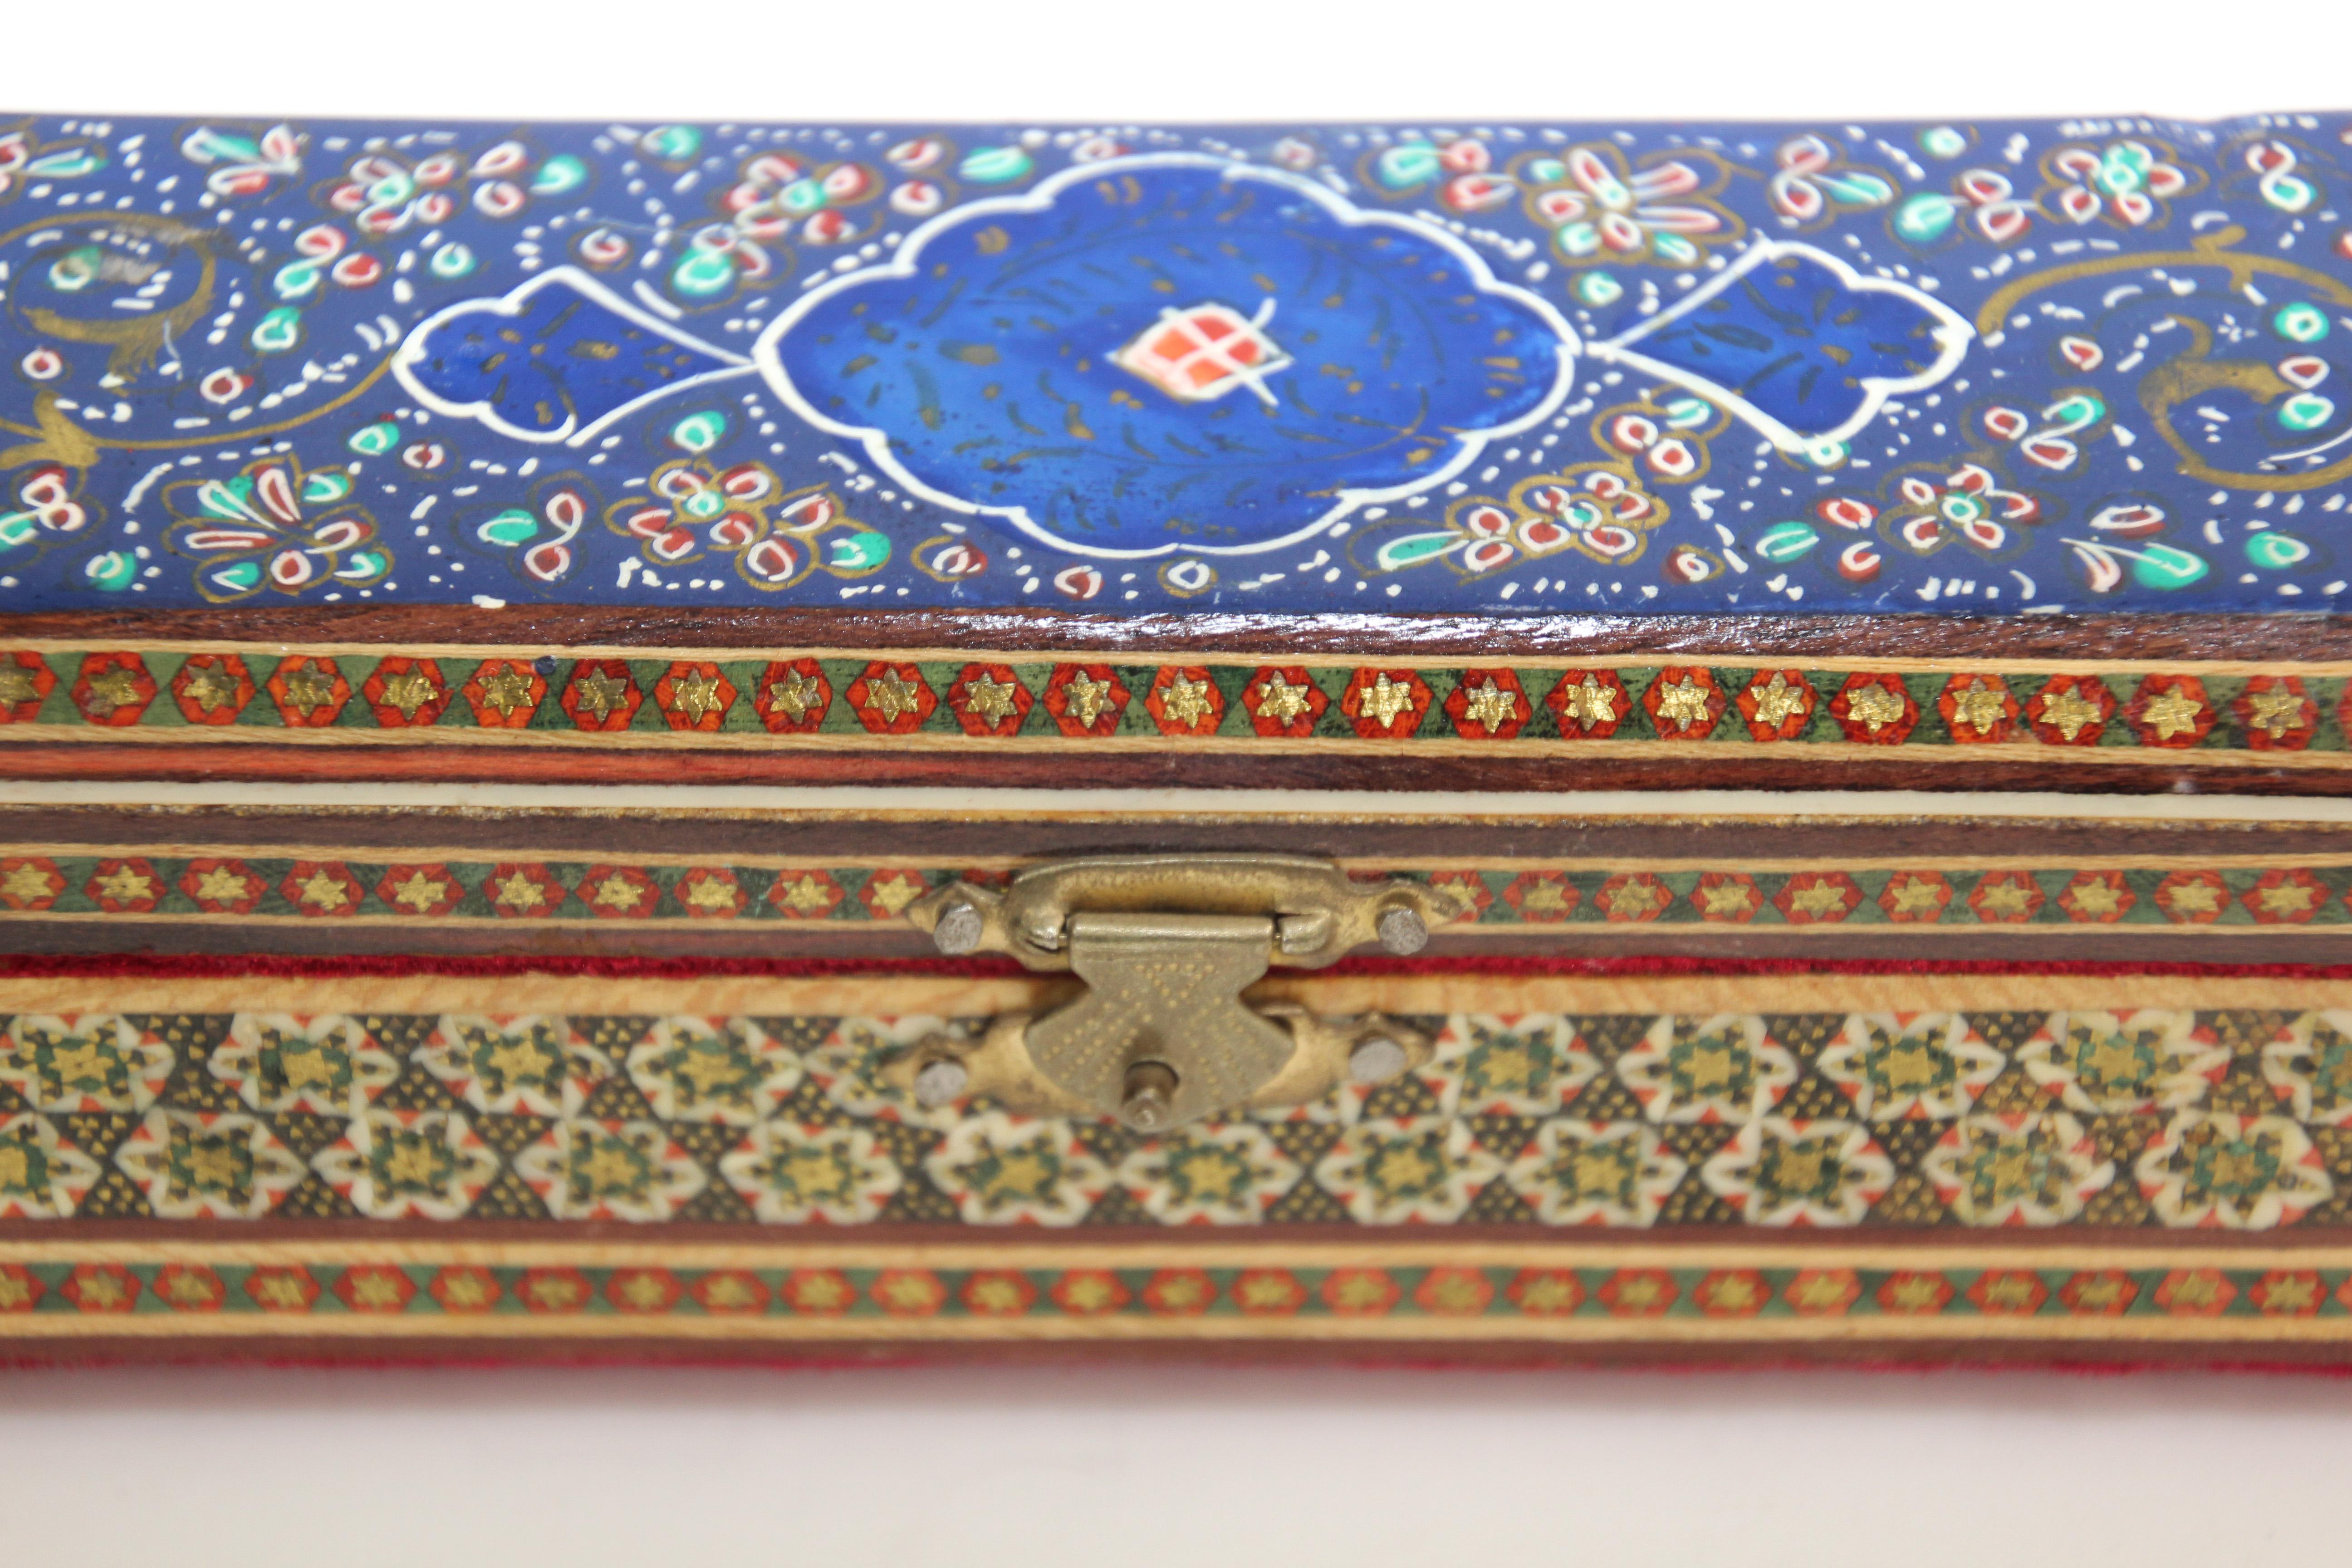 1950s Middle Eastern Moorish Inlaid Jewelry Trinket Mosaic Box 1